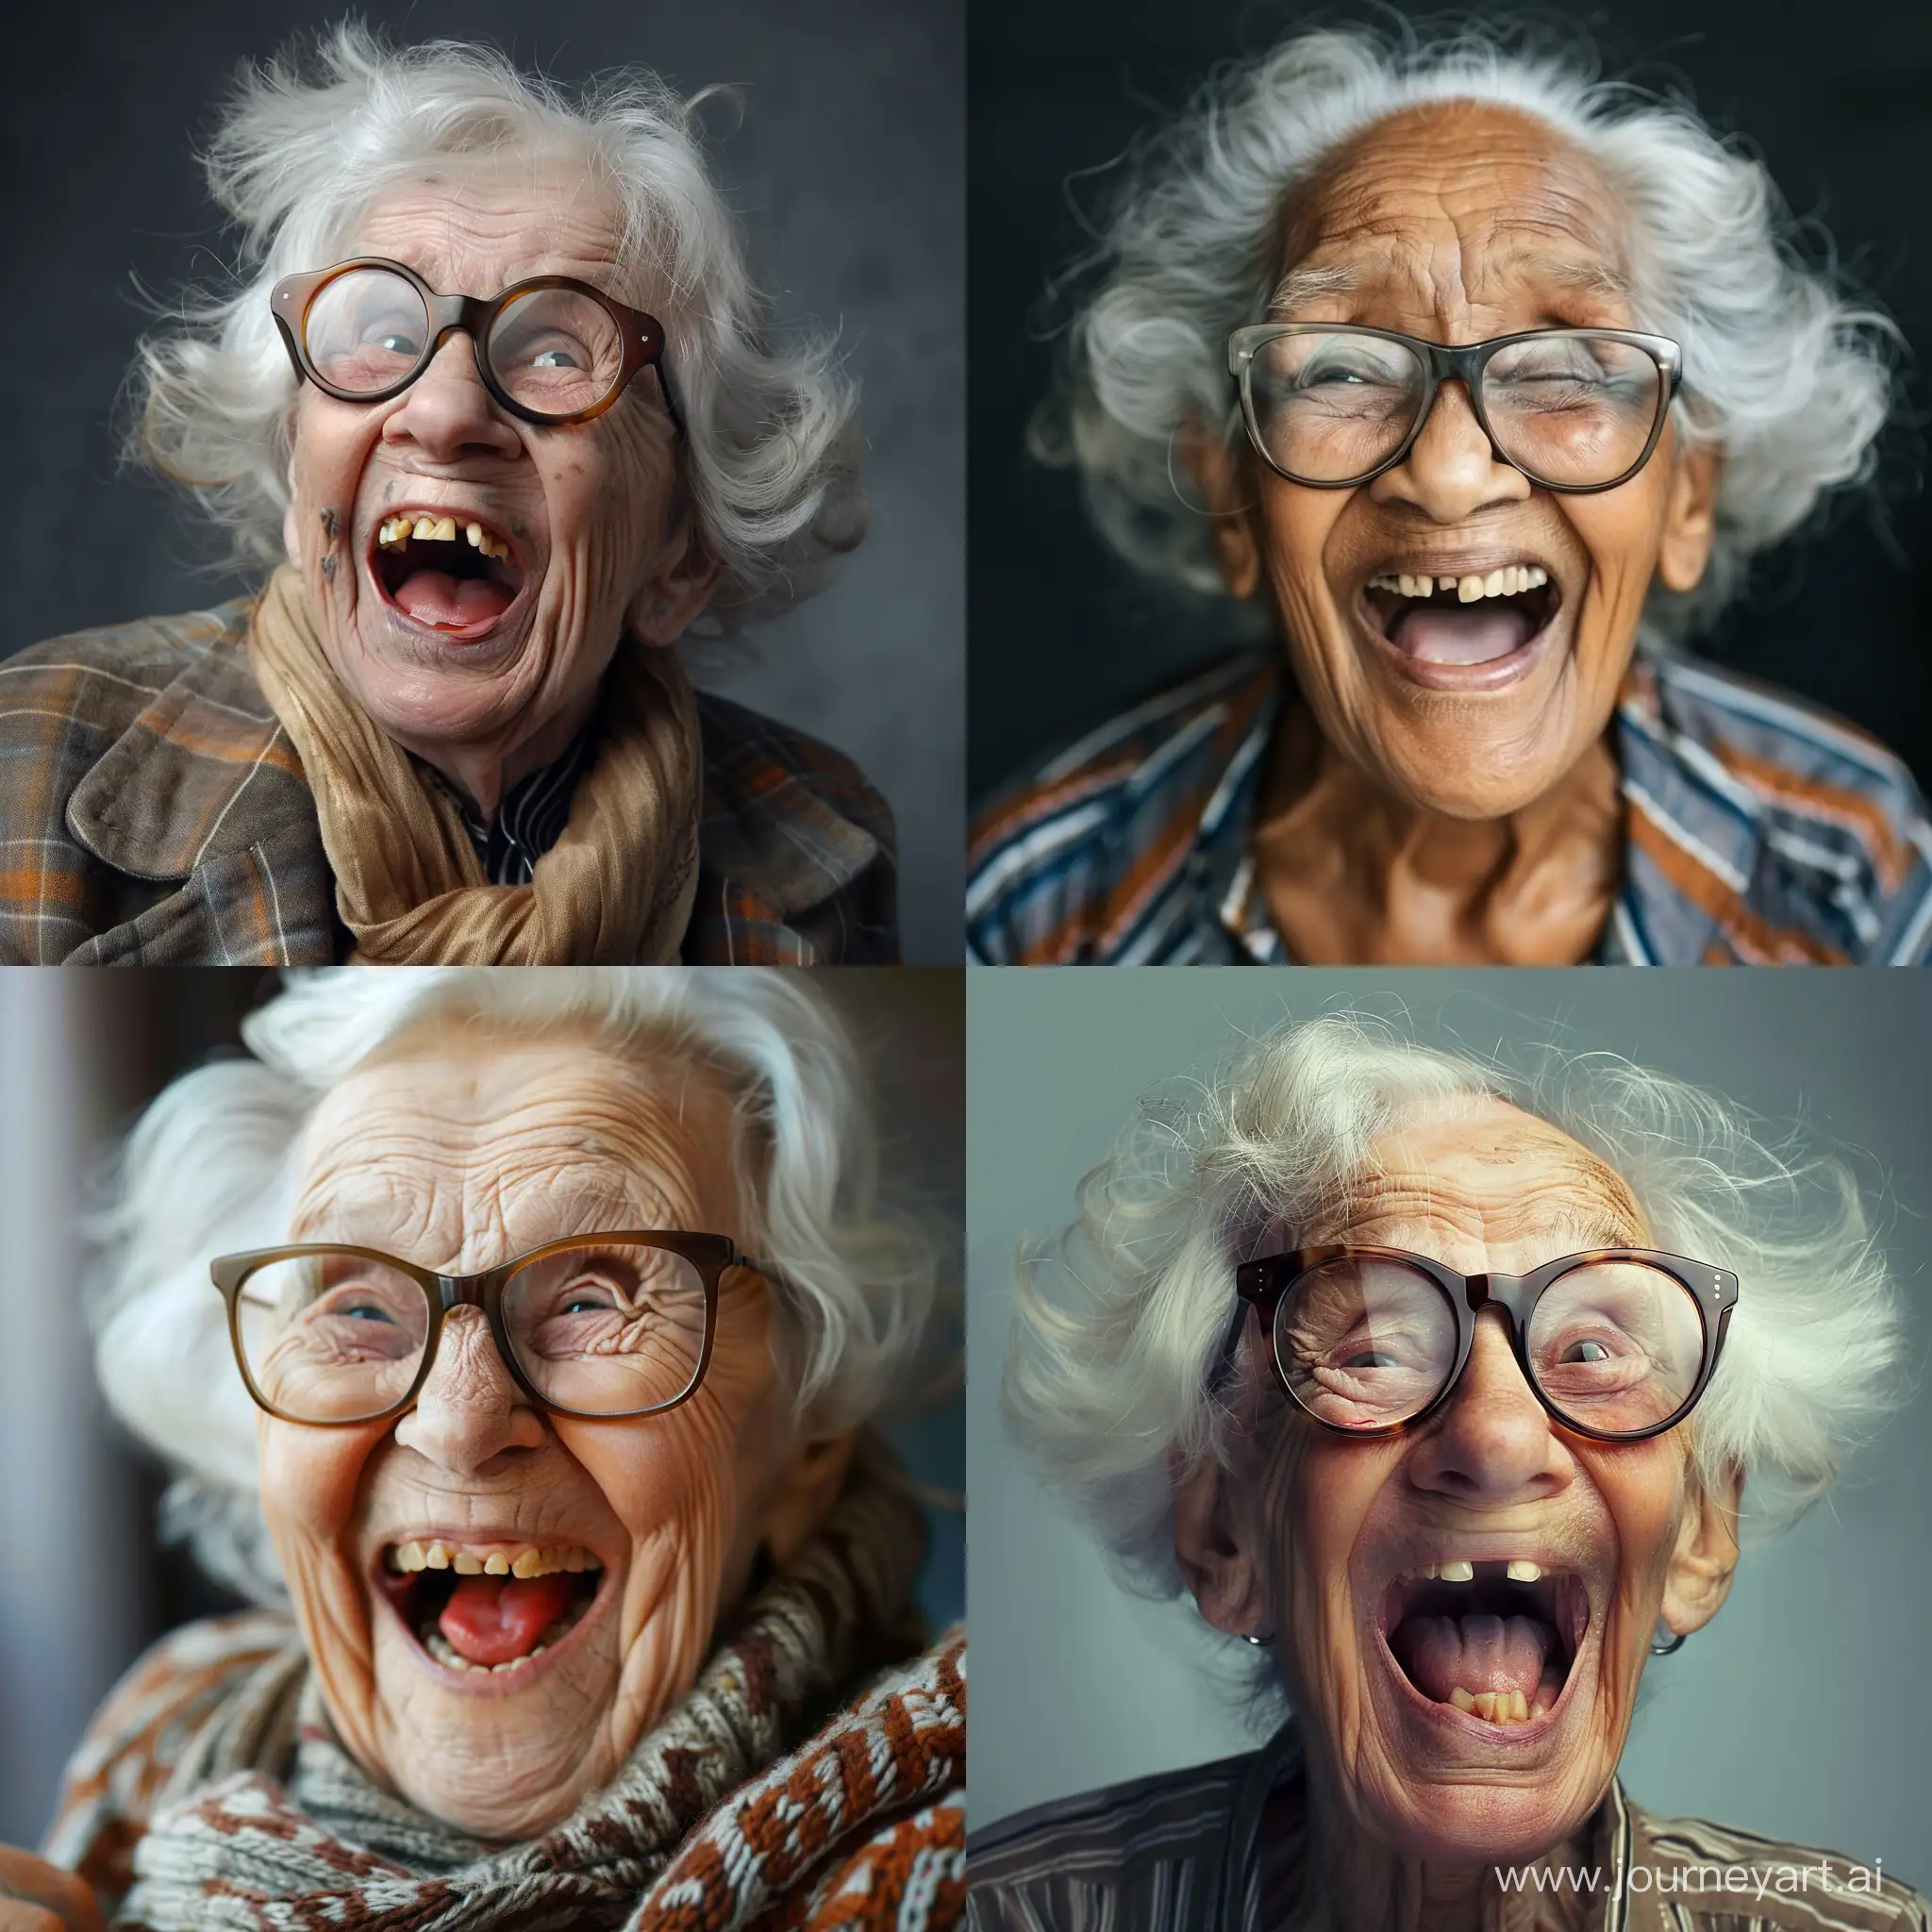 Joyful-Elderly-Woman-with-Big-Glasses-Laughing